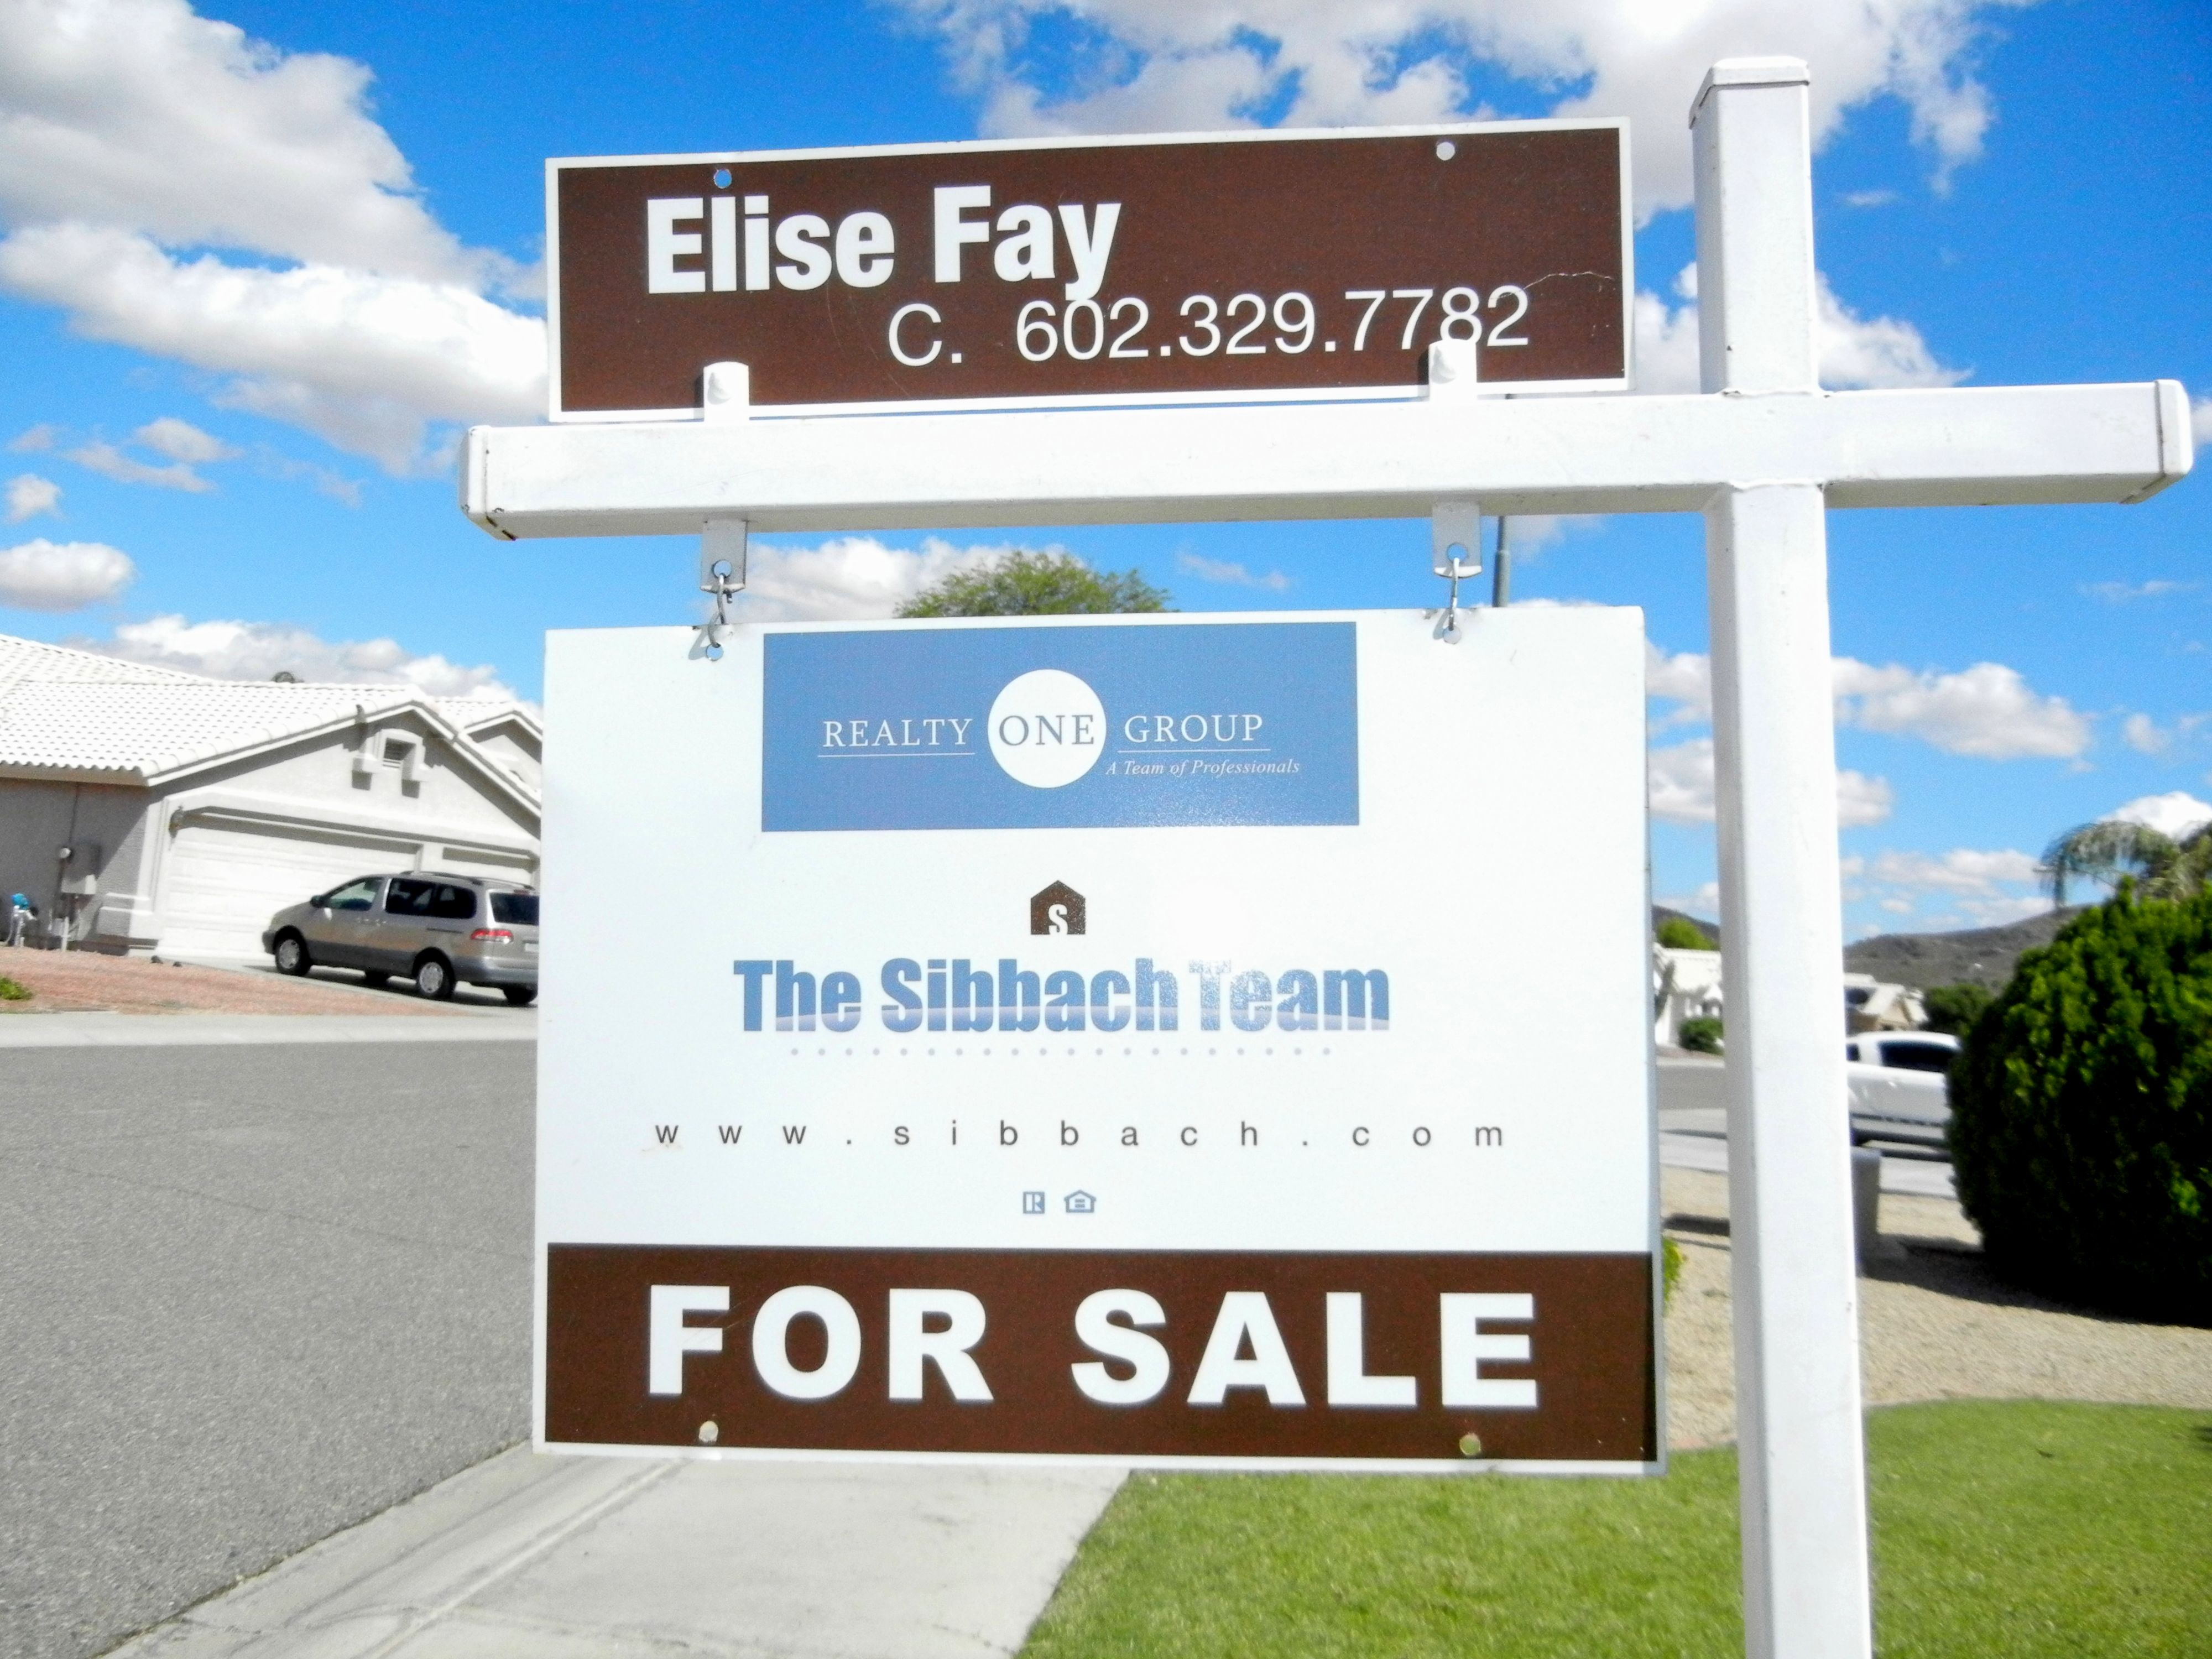 Sibbach Team For Sale sign